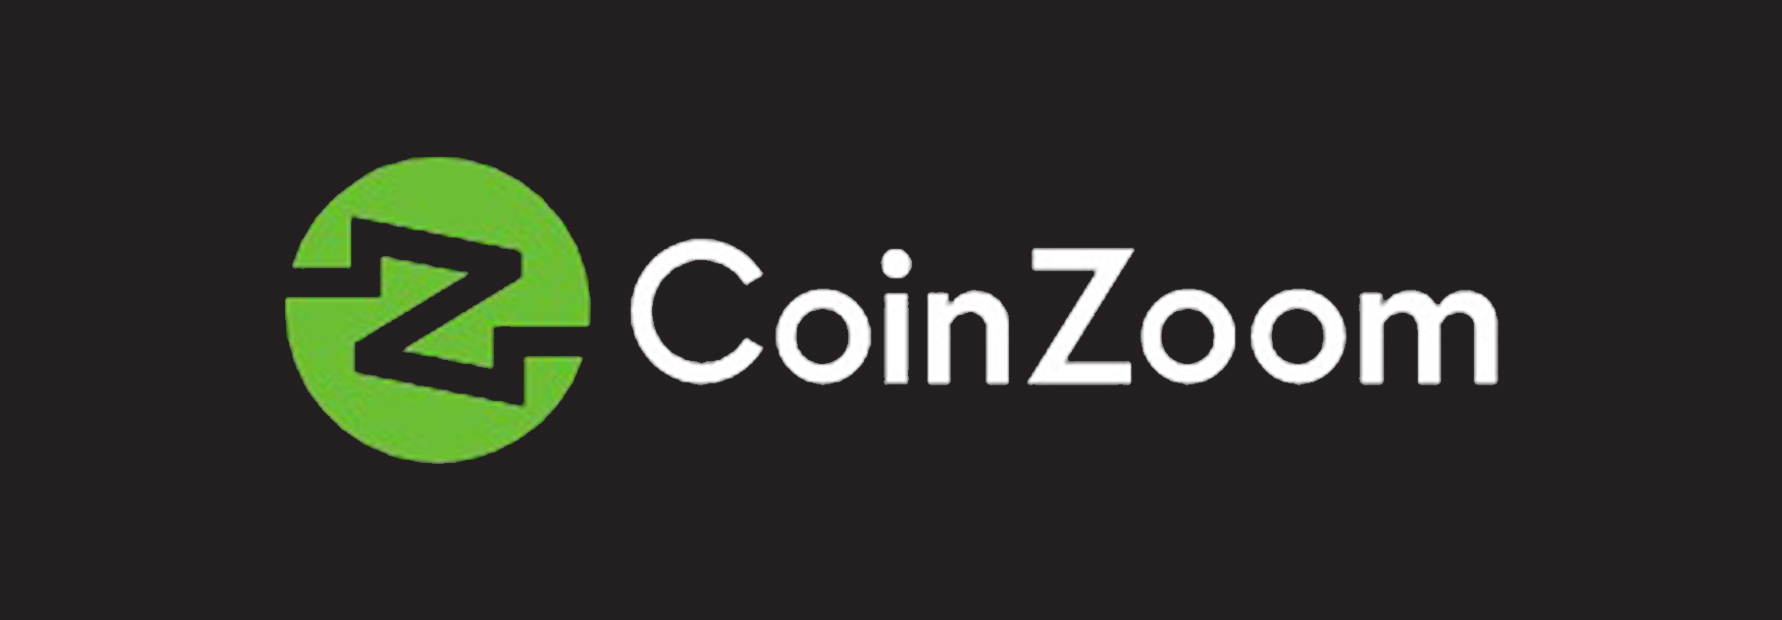 coinzoom-logo.jpg